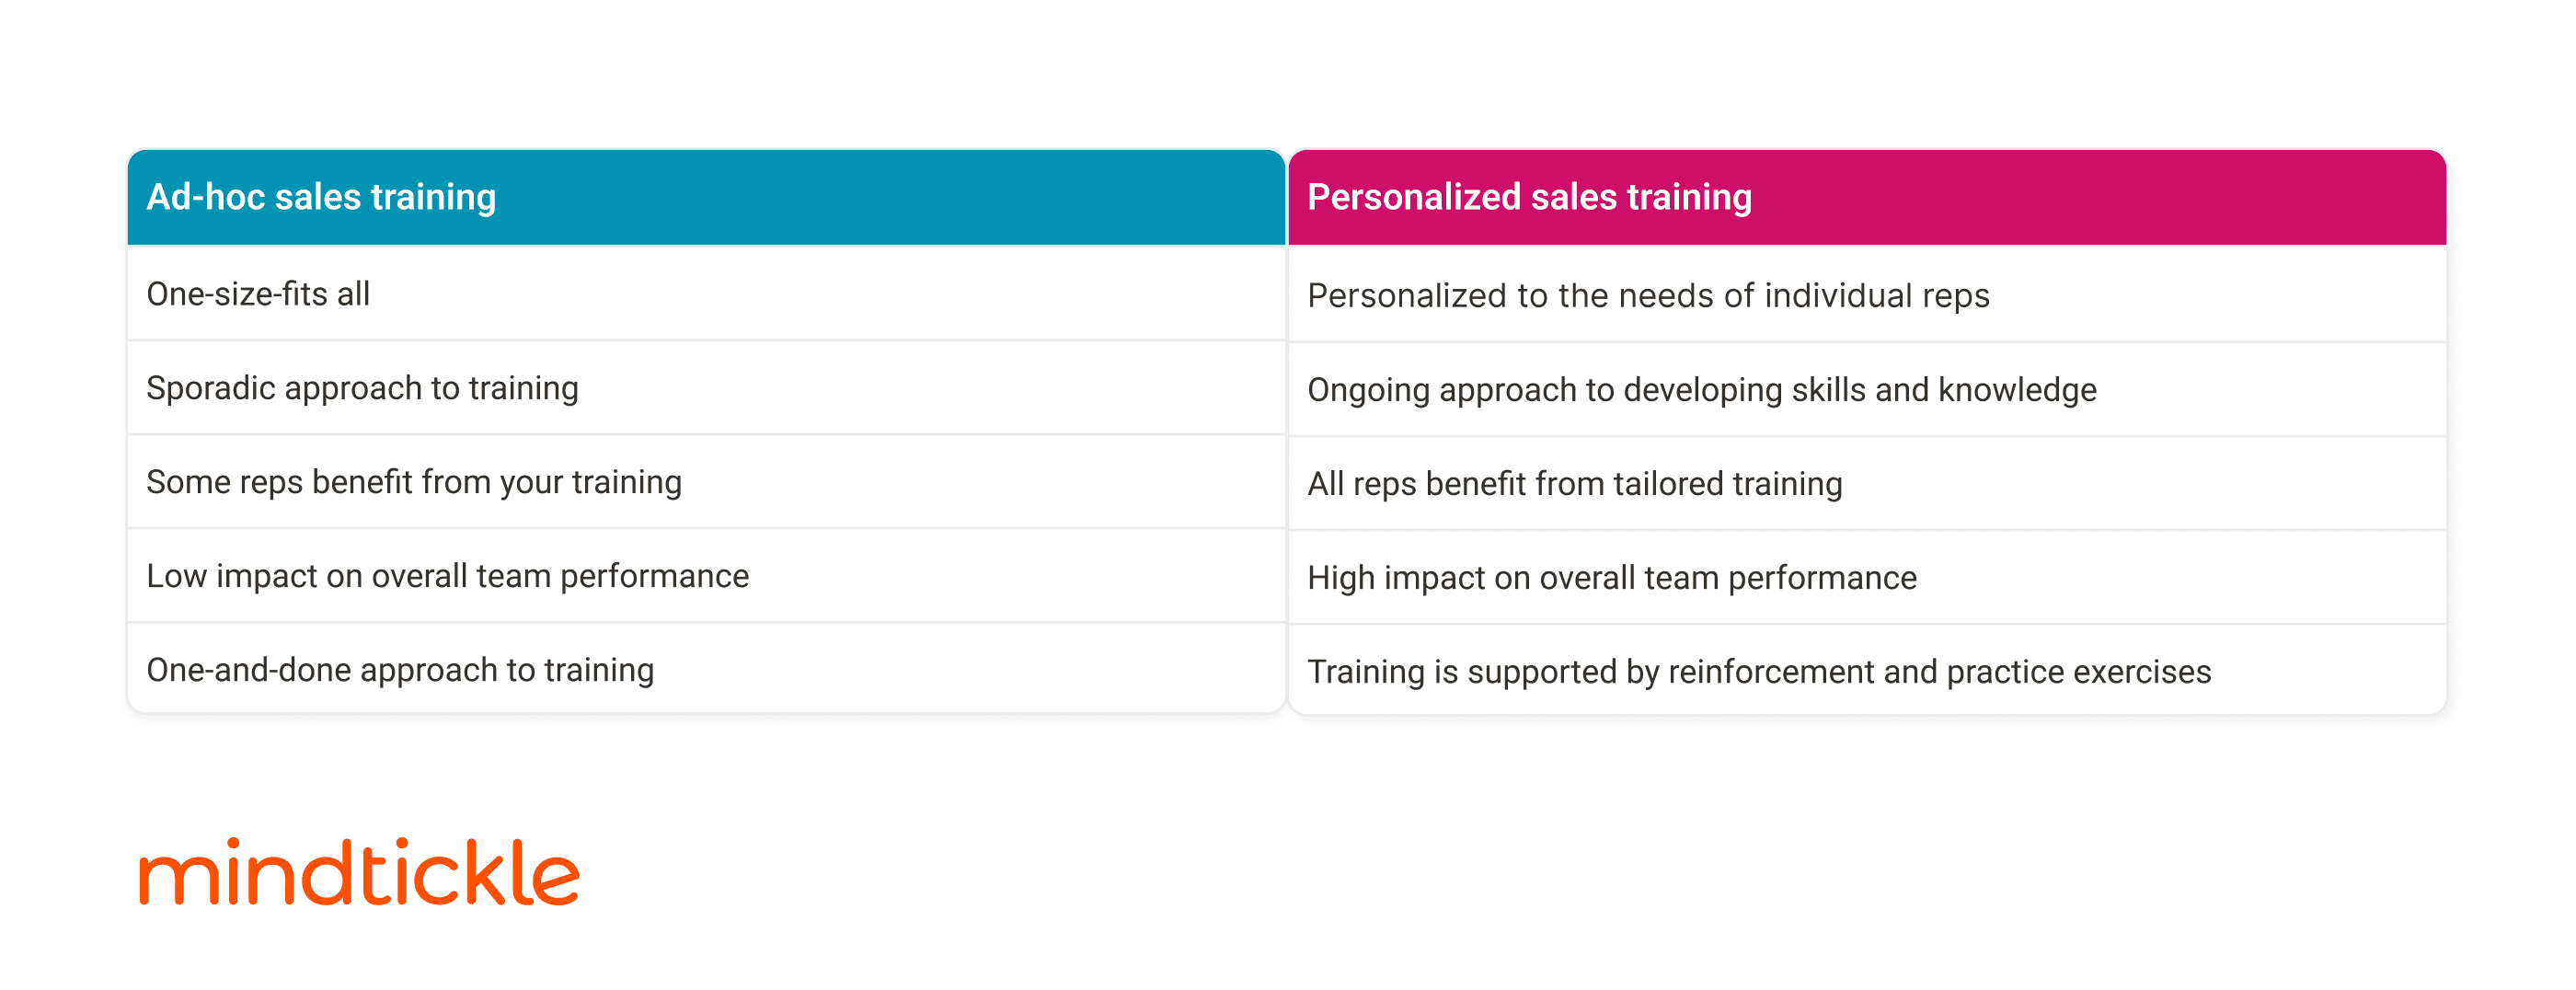 ad hoc training vs. personalized sales training